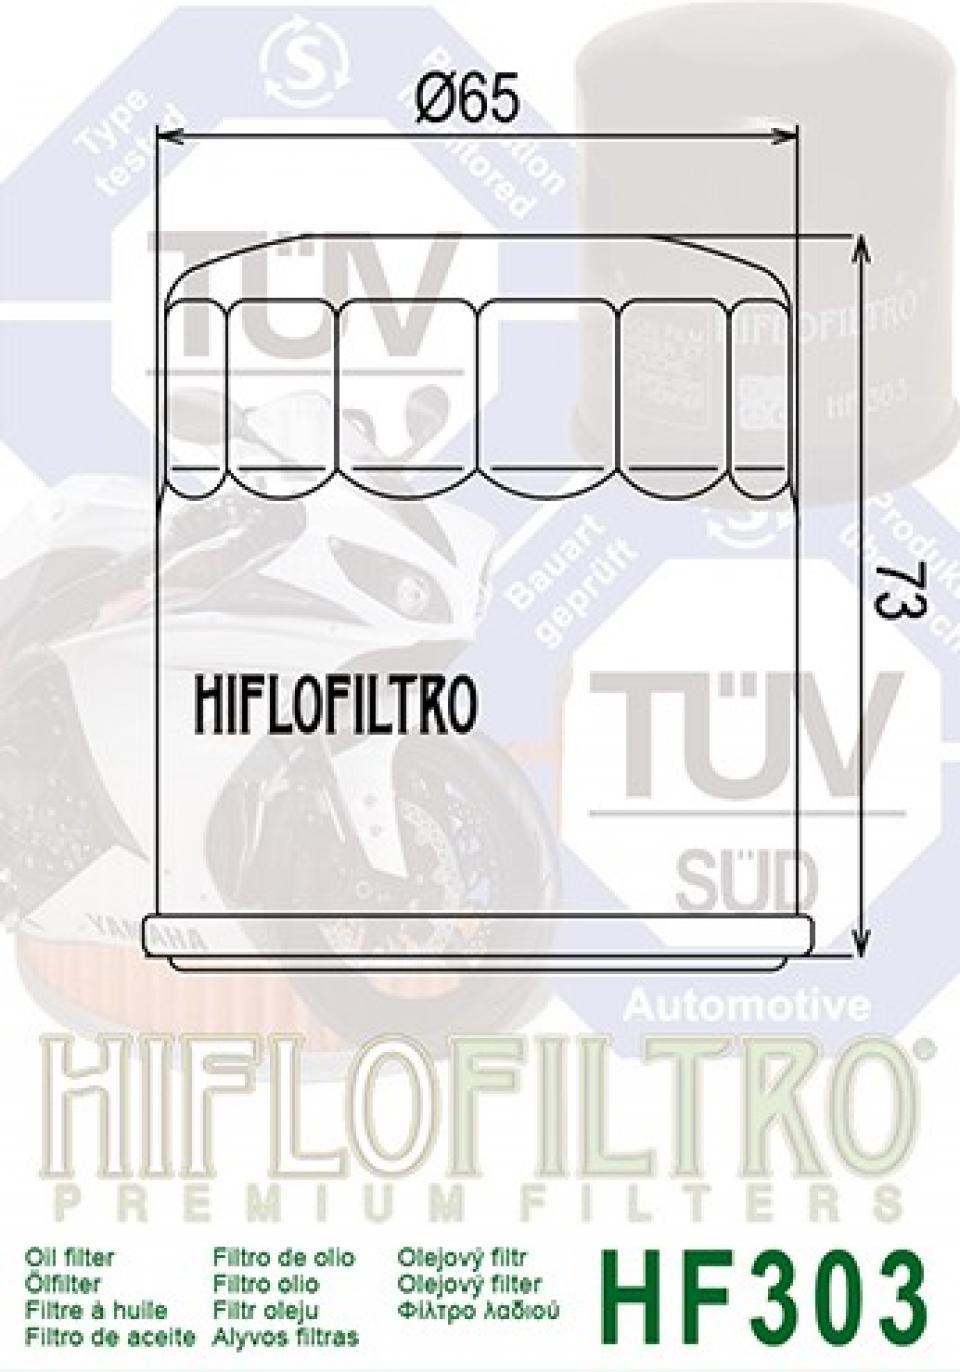 Filtre à huile Hiflofiltro pour Moto Kawasaki 650 ER6 2007 à 2015 HF303 Neuf